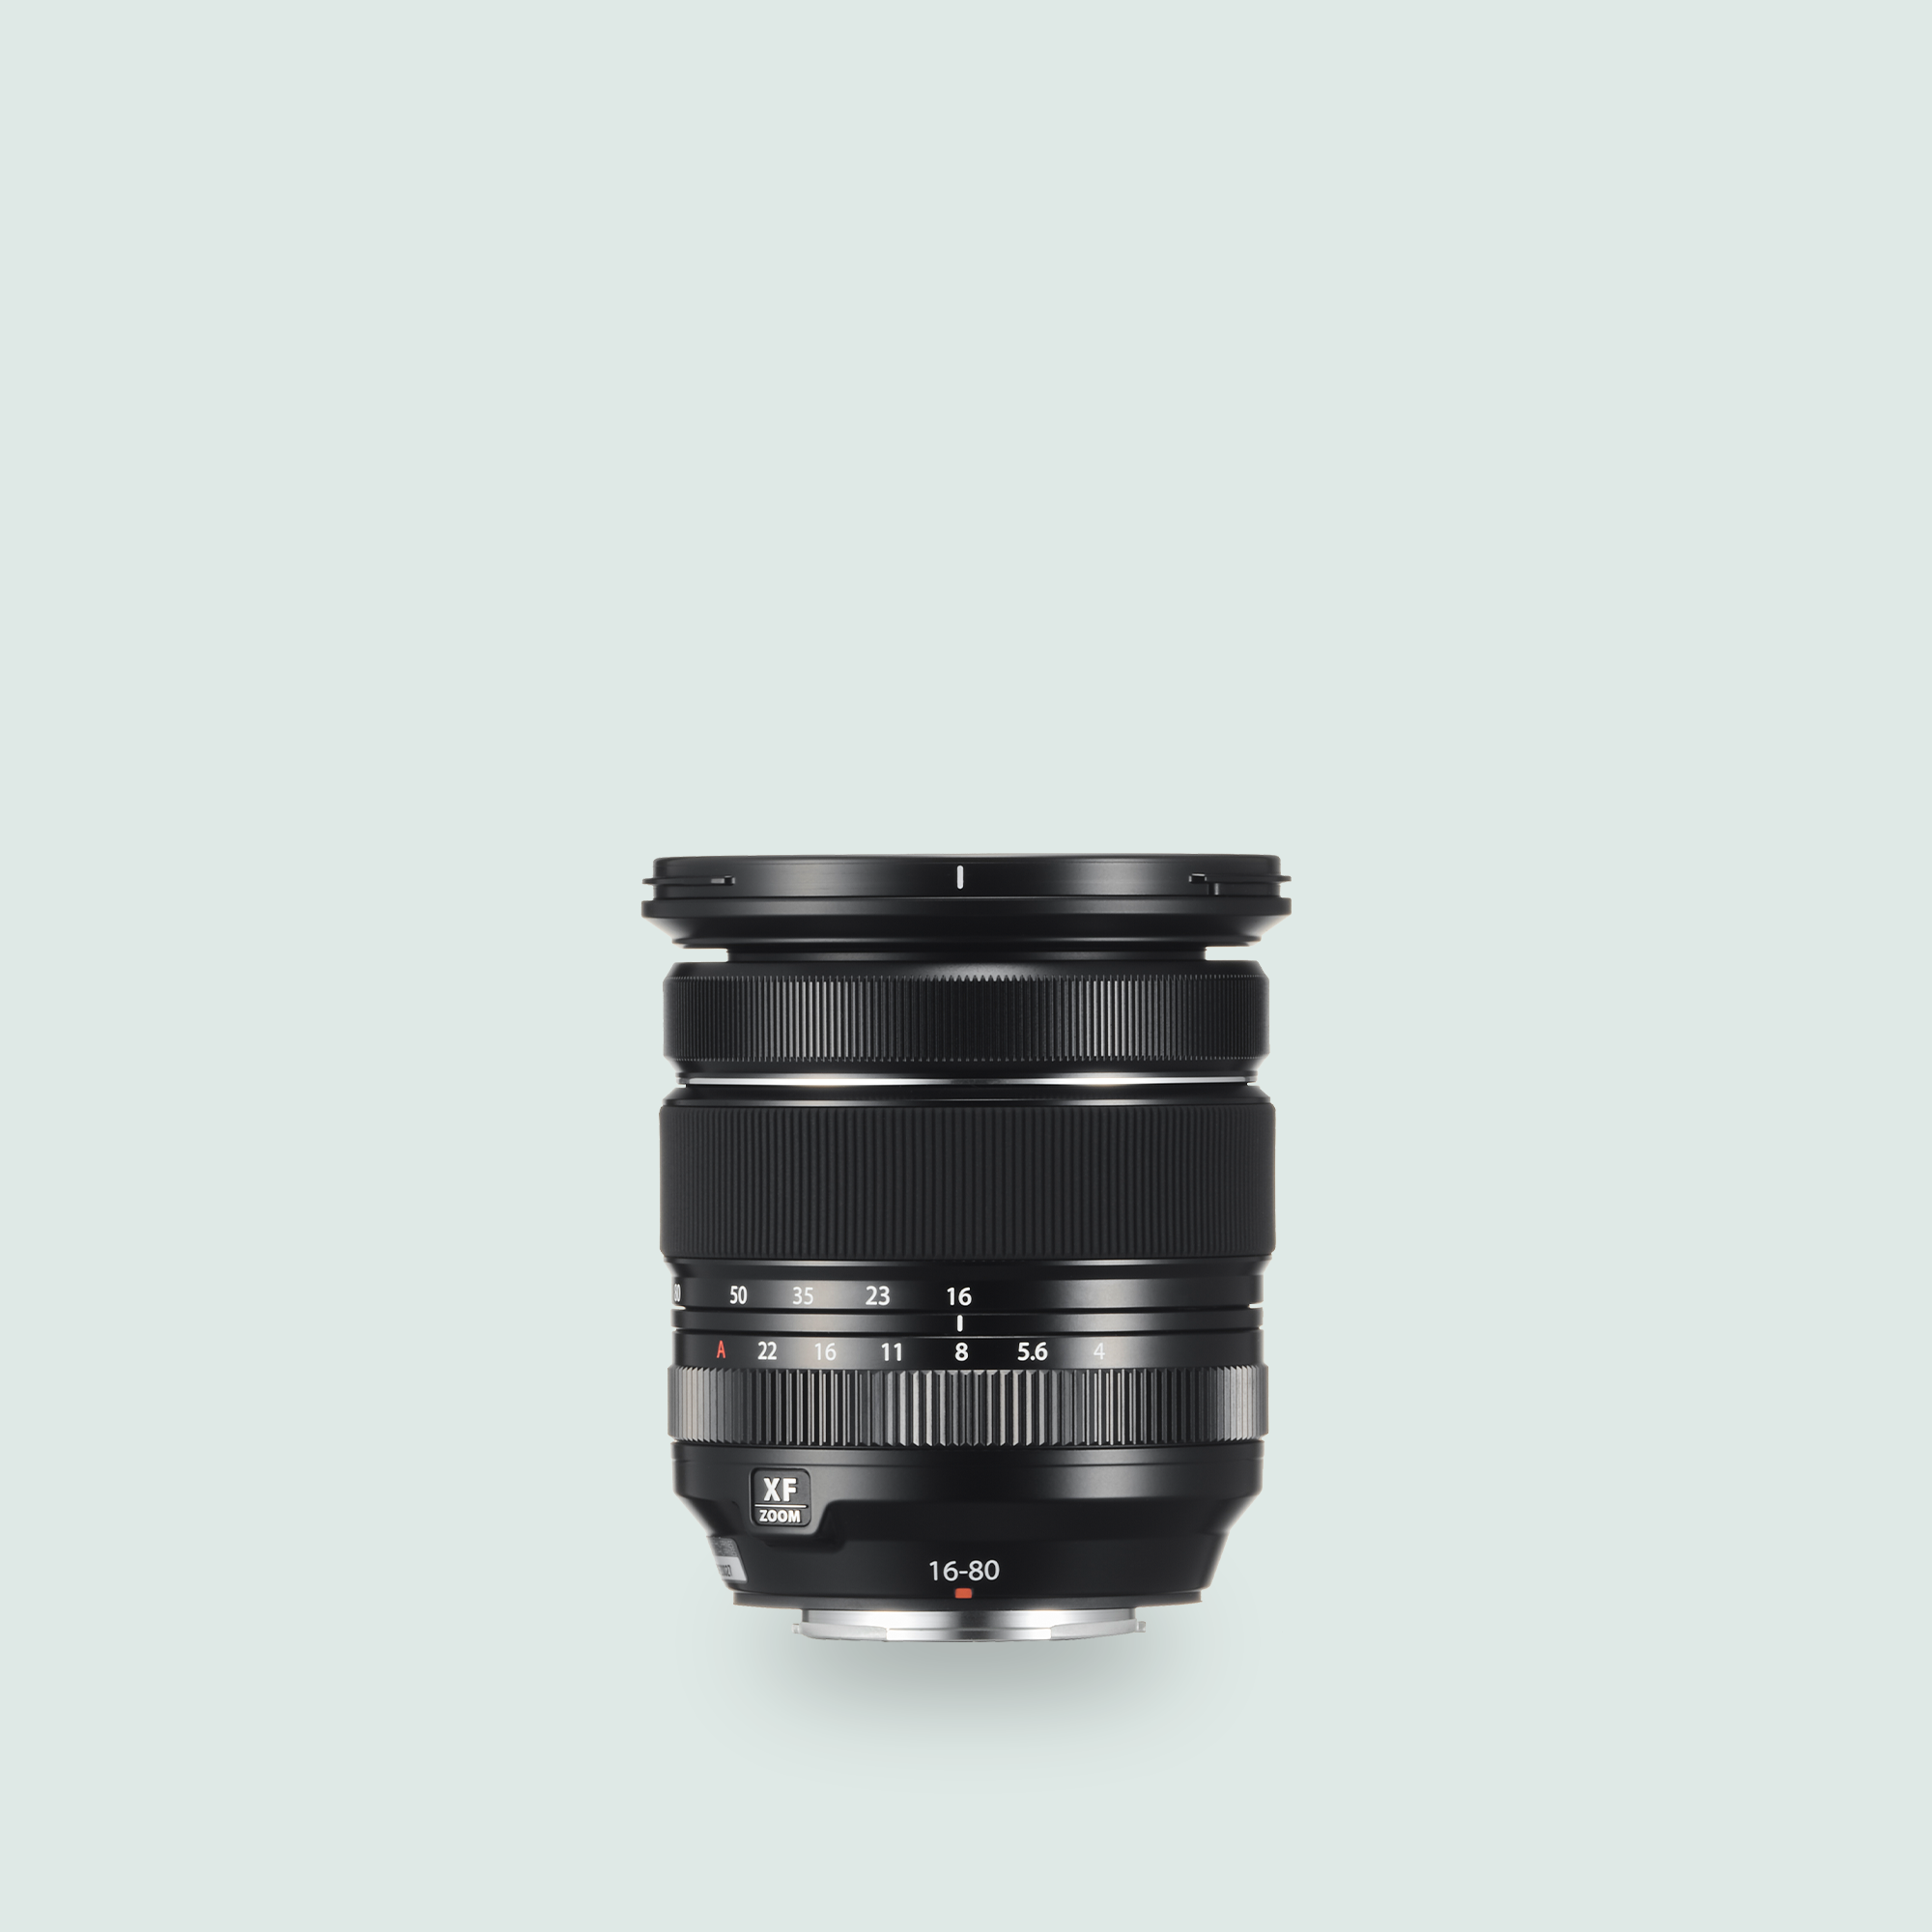 XF 18-55mm F2.8-4 R LM OIS Lens | Fujifilm AU House of Photography